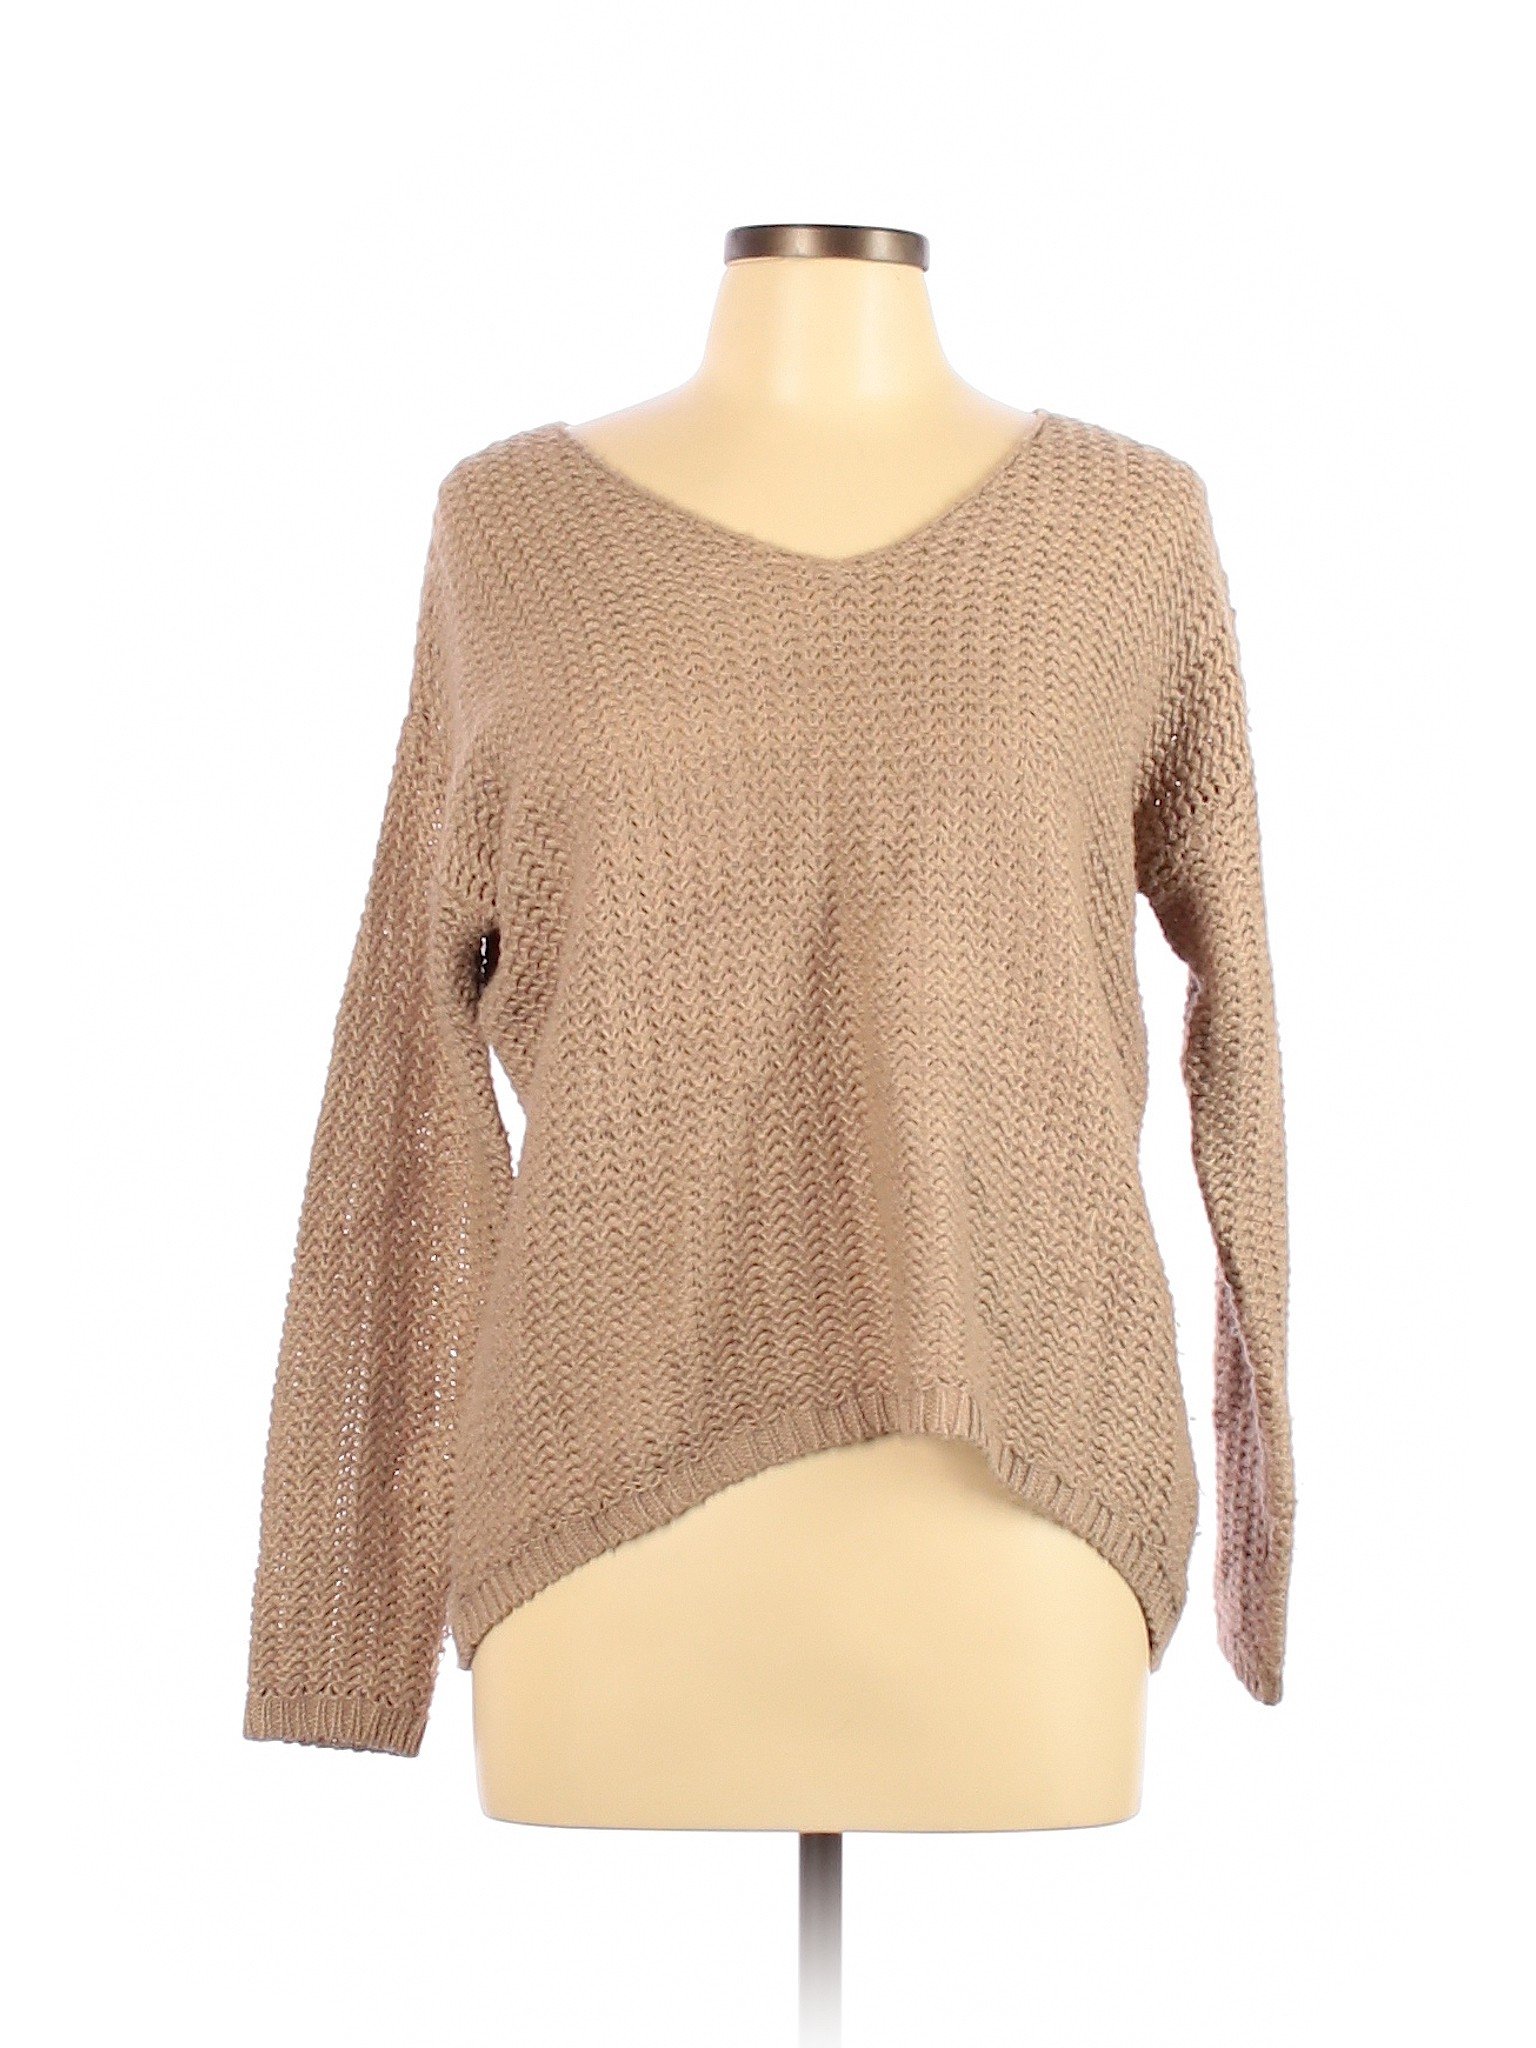 H&M Women Brown Pullover Sweater S | eBay